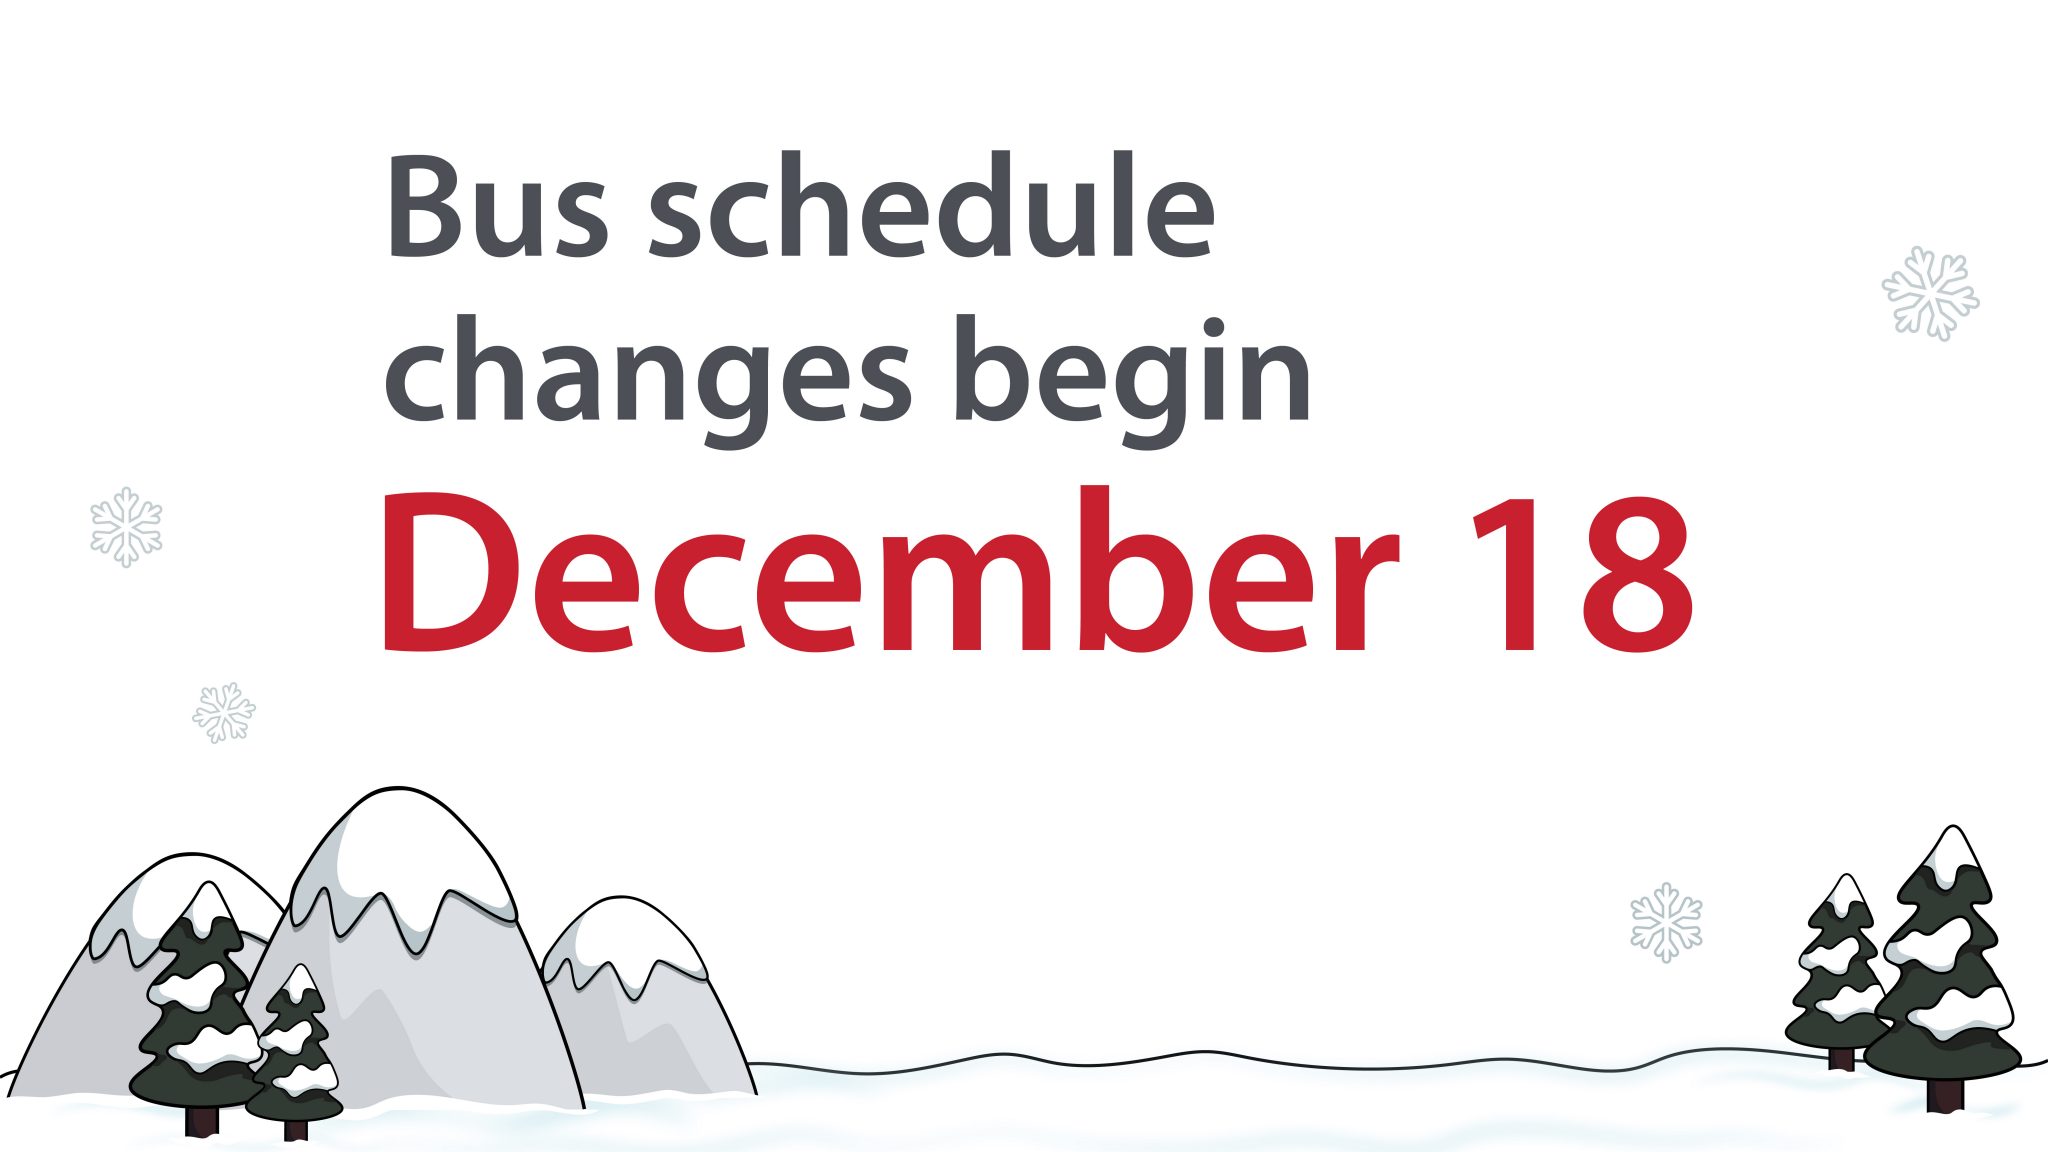 Winter service changes begin December 18